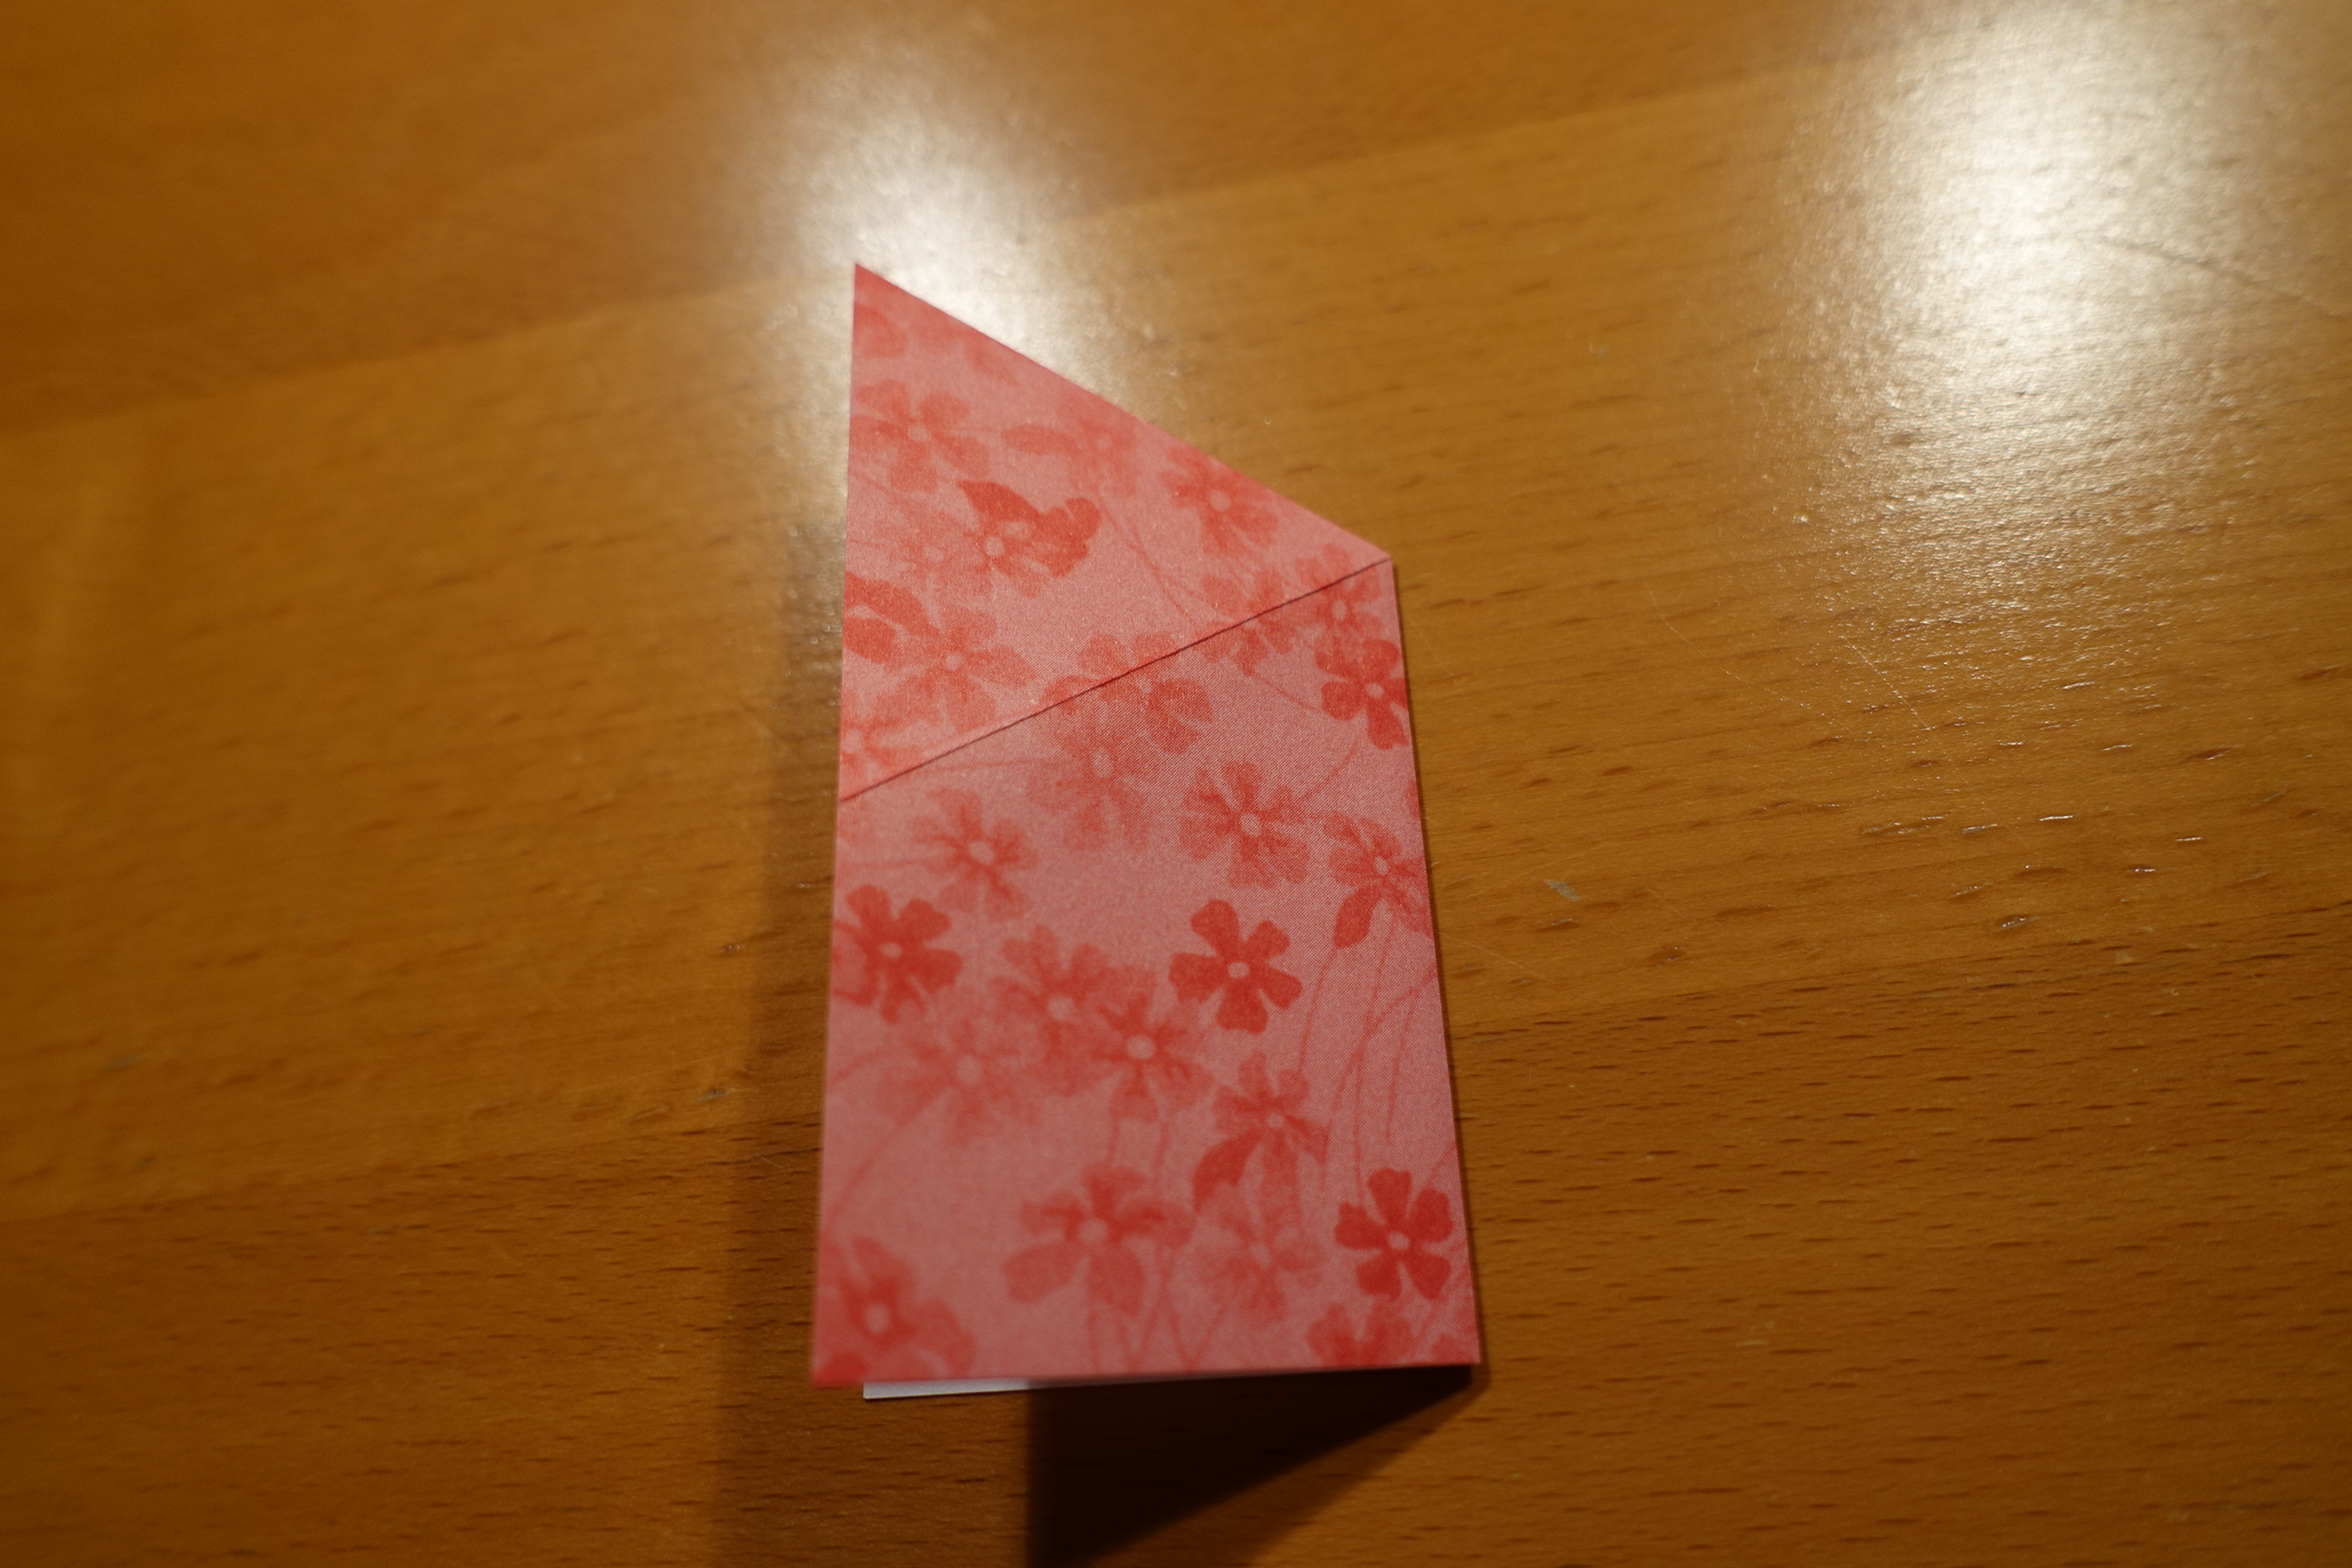 https://origami.kosmulski.org/img/instructions/star-ananke/03.jpg